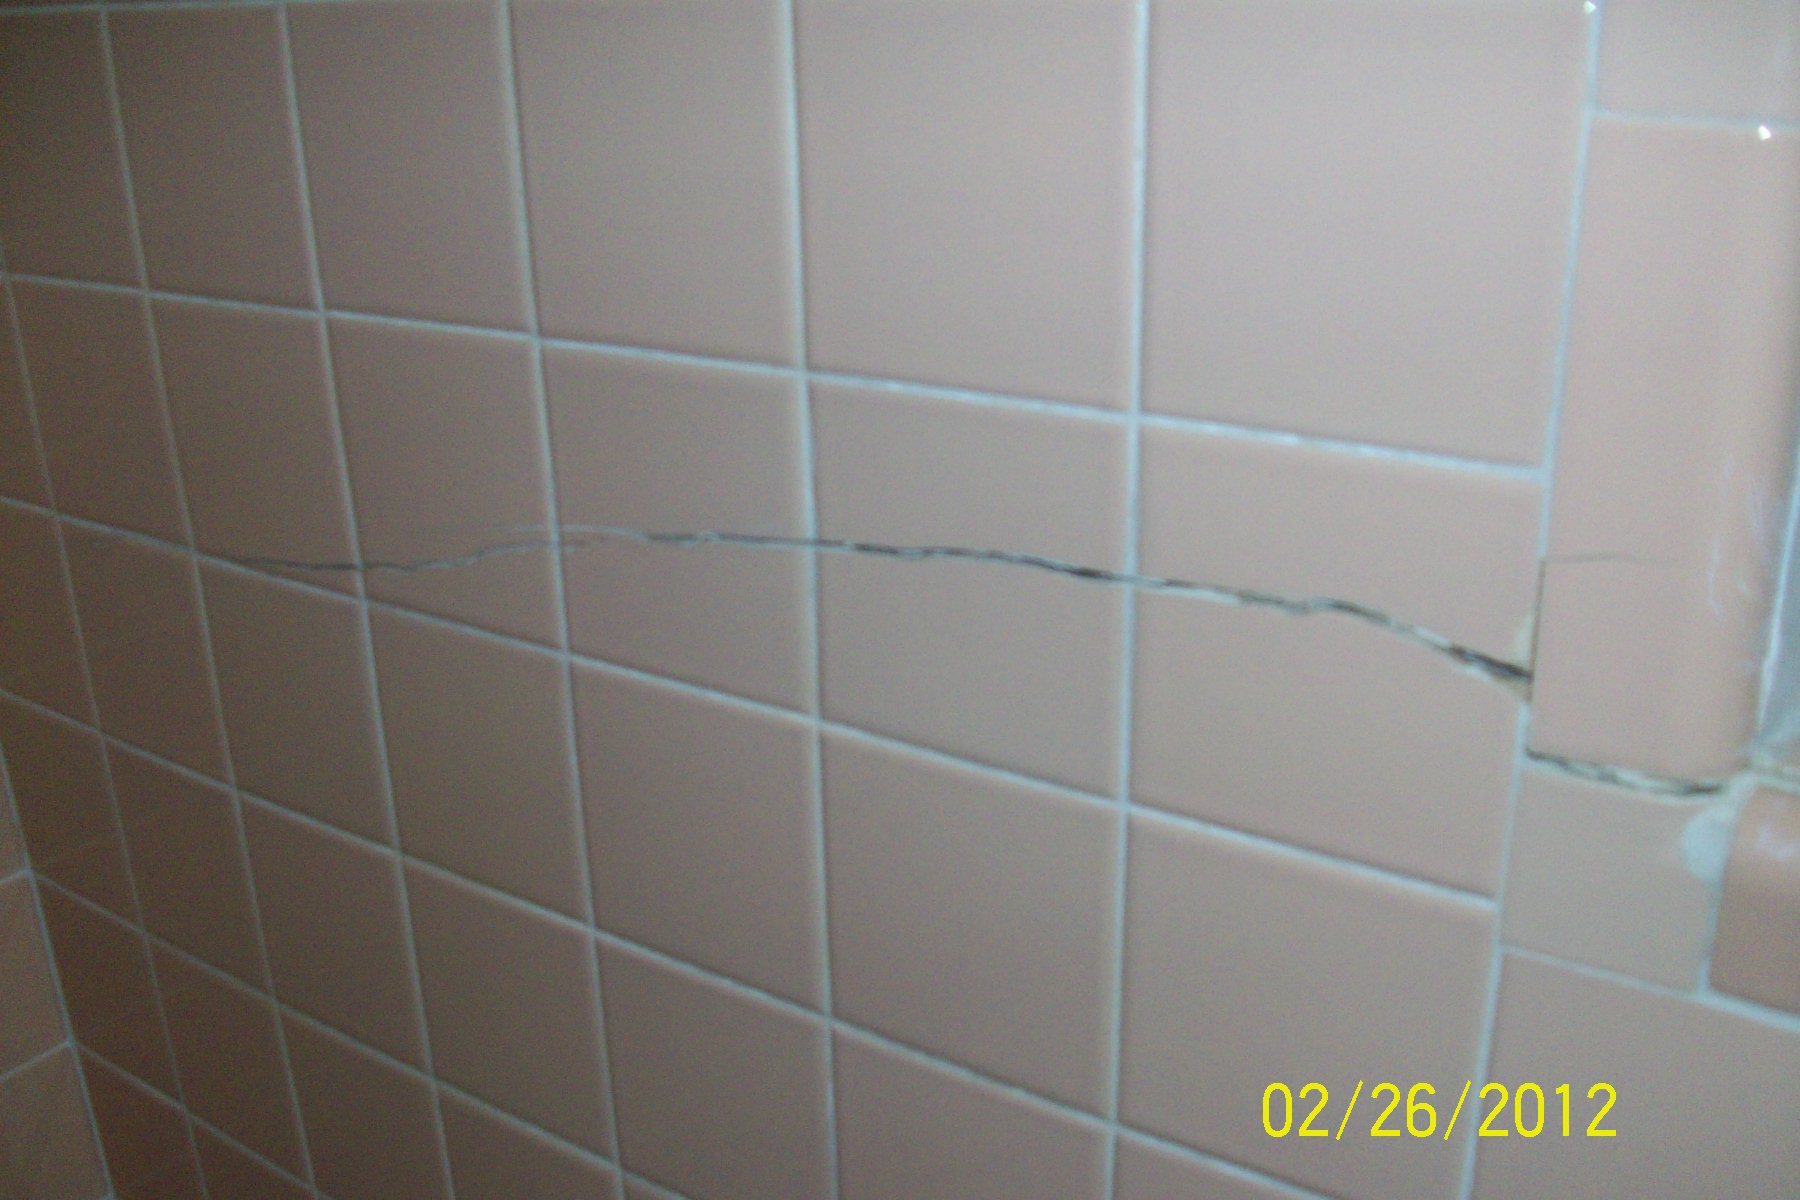 Florida sinkhole cracks in bath tile